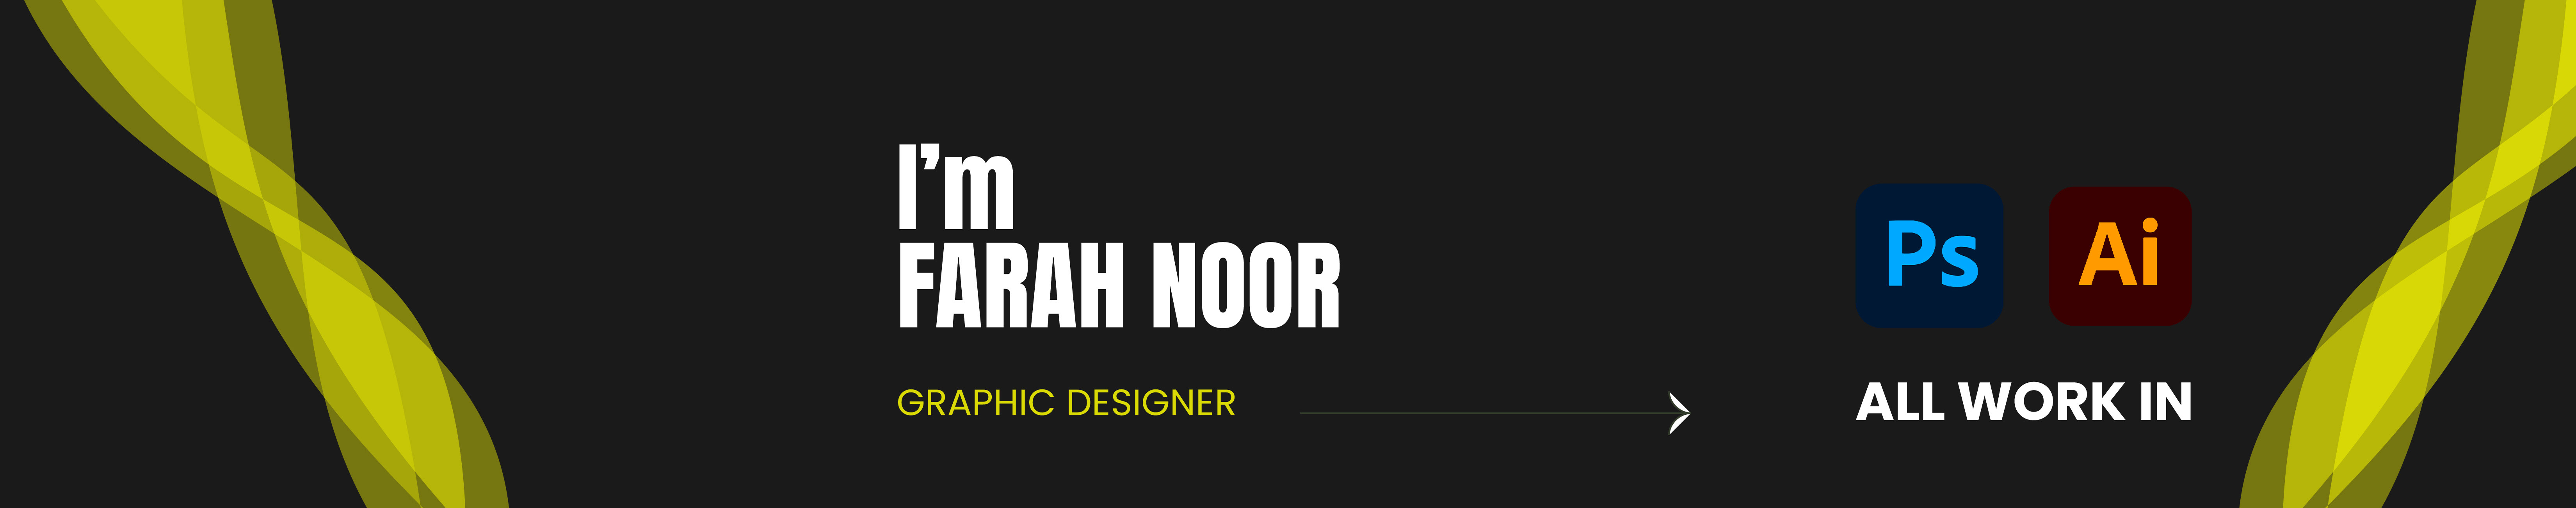 Farah Noor's profile banner